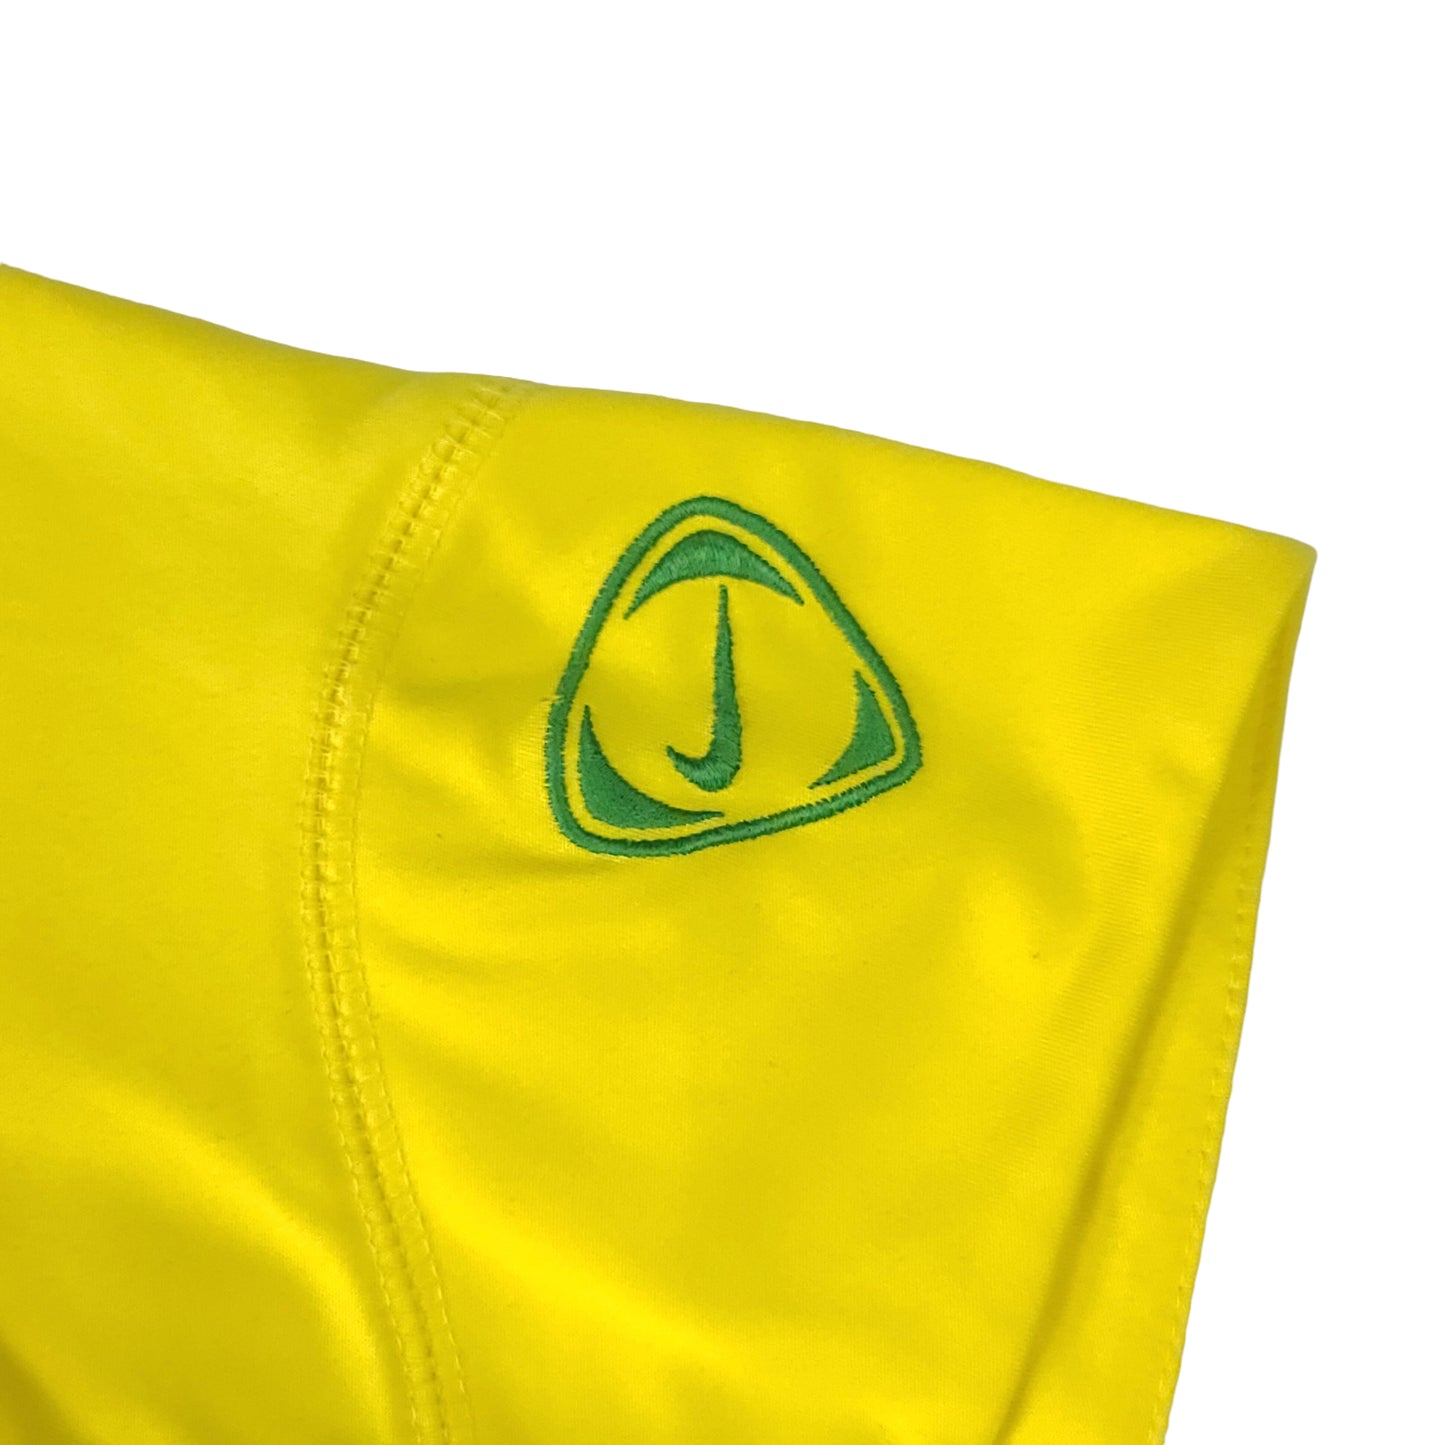 Brazil Nike National Team Warm Up Yellow Jersey